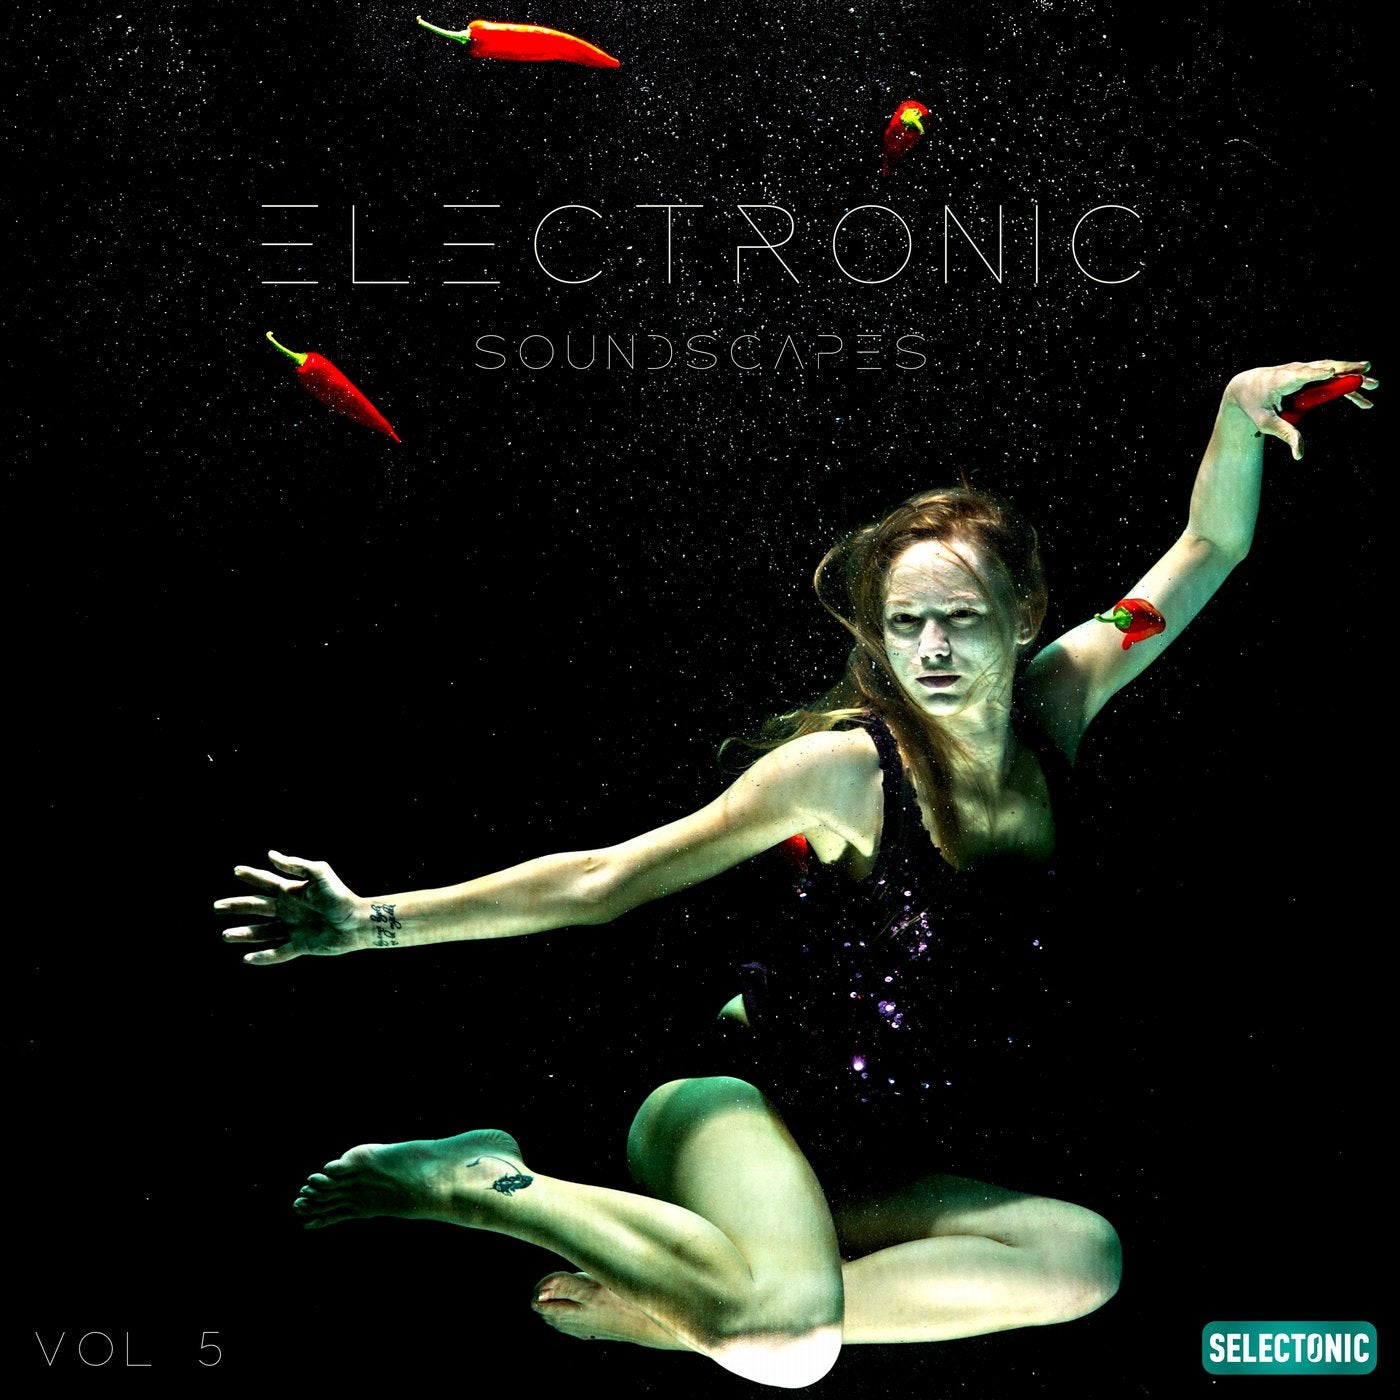 Electronic Soundscapes, Vol. 5